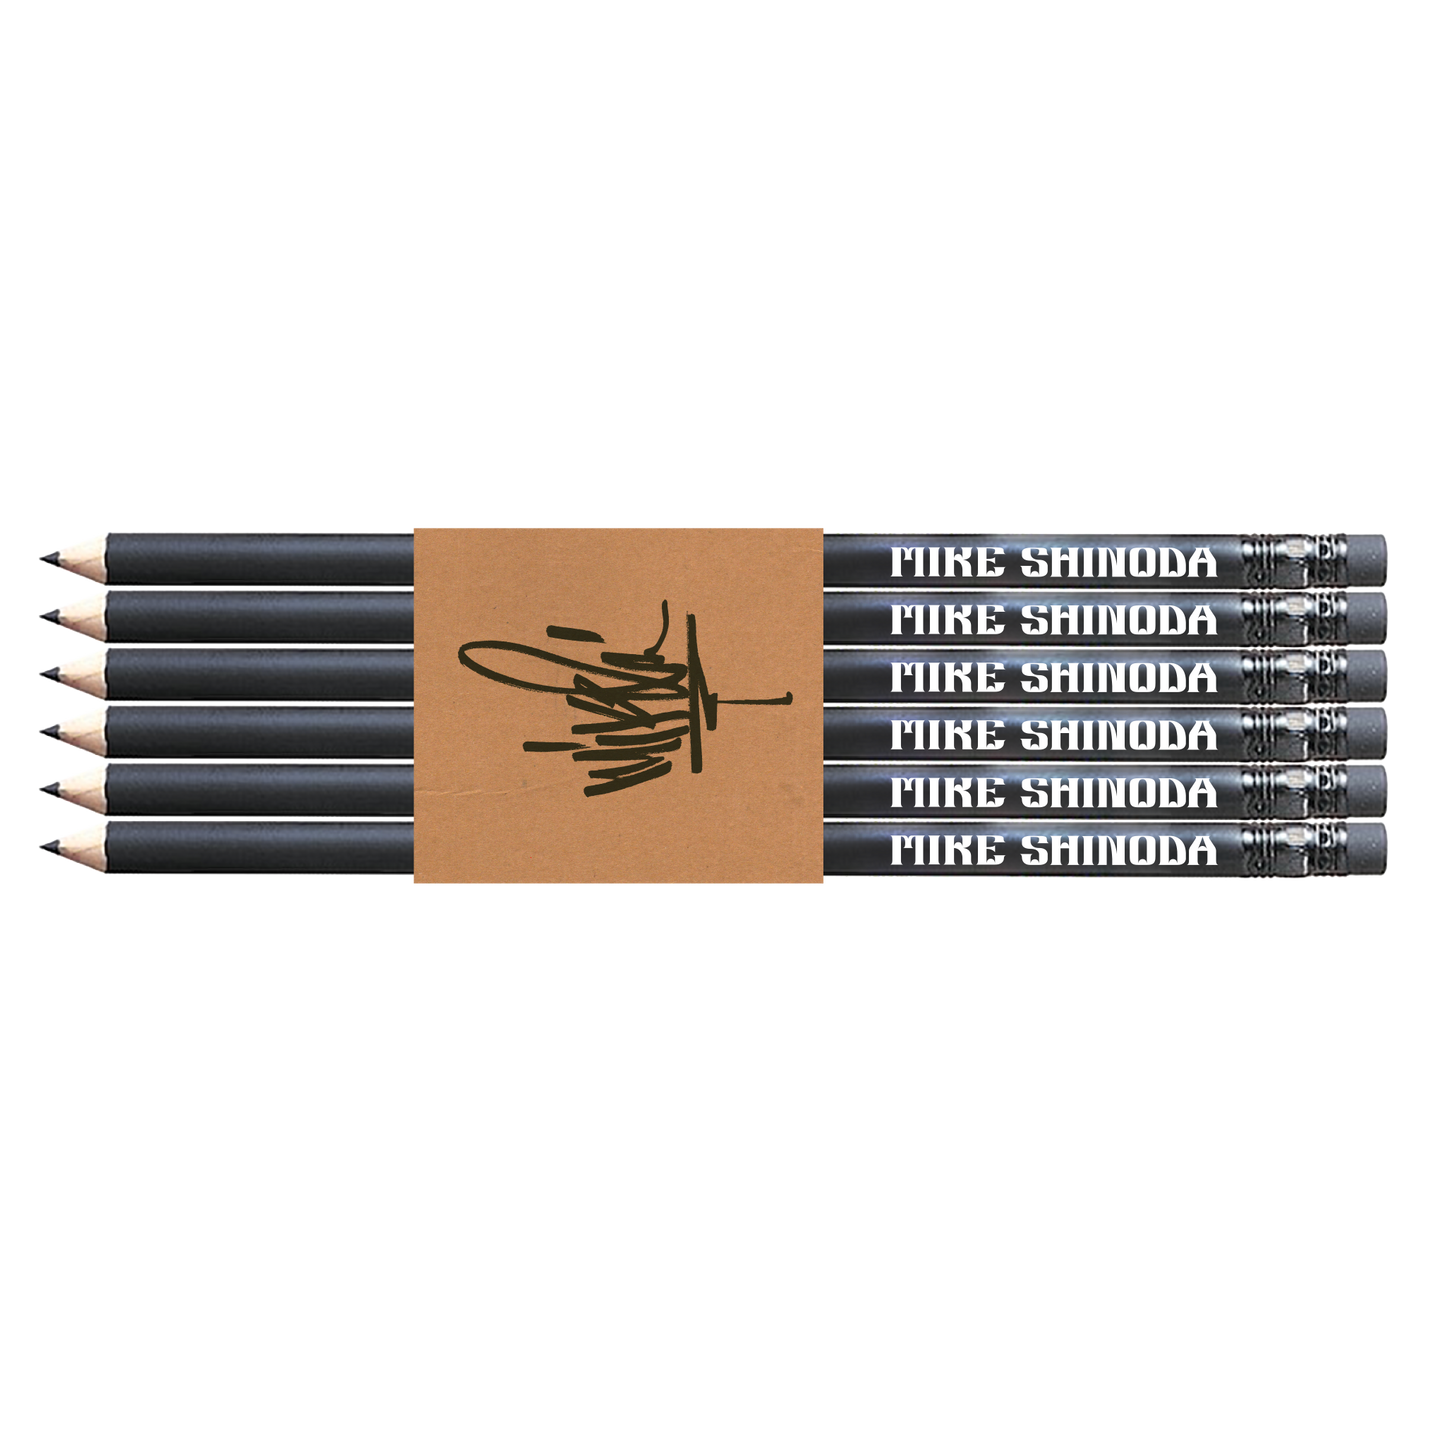 MS Graphite Pencil Set